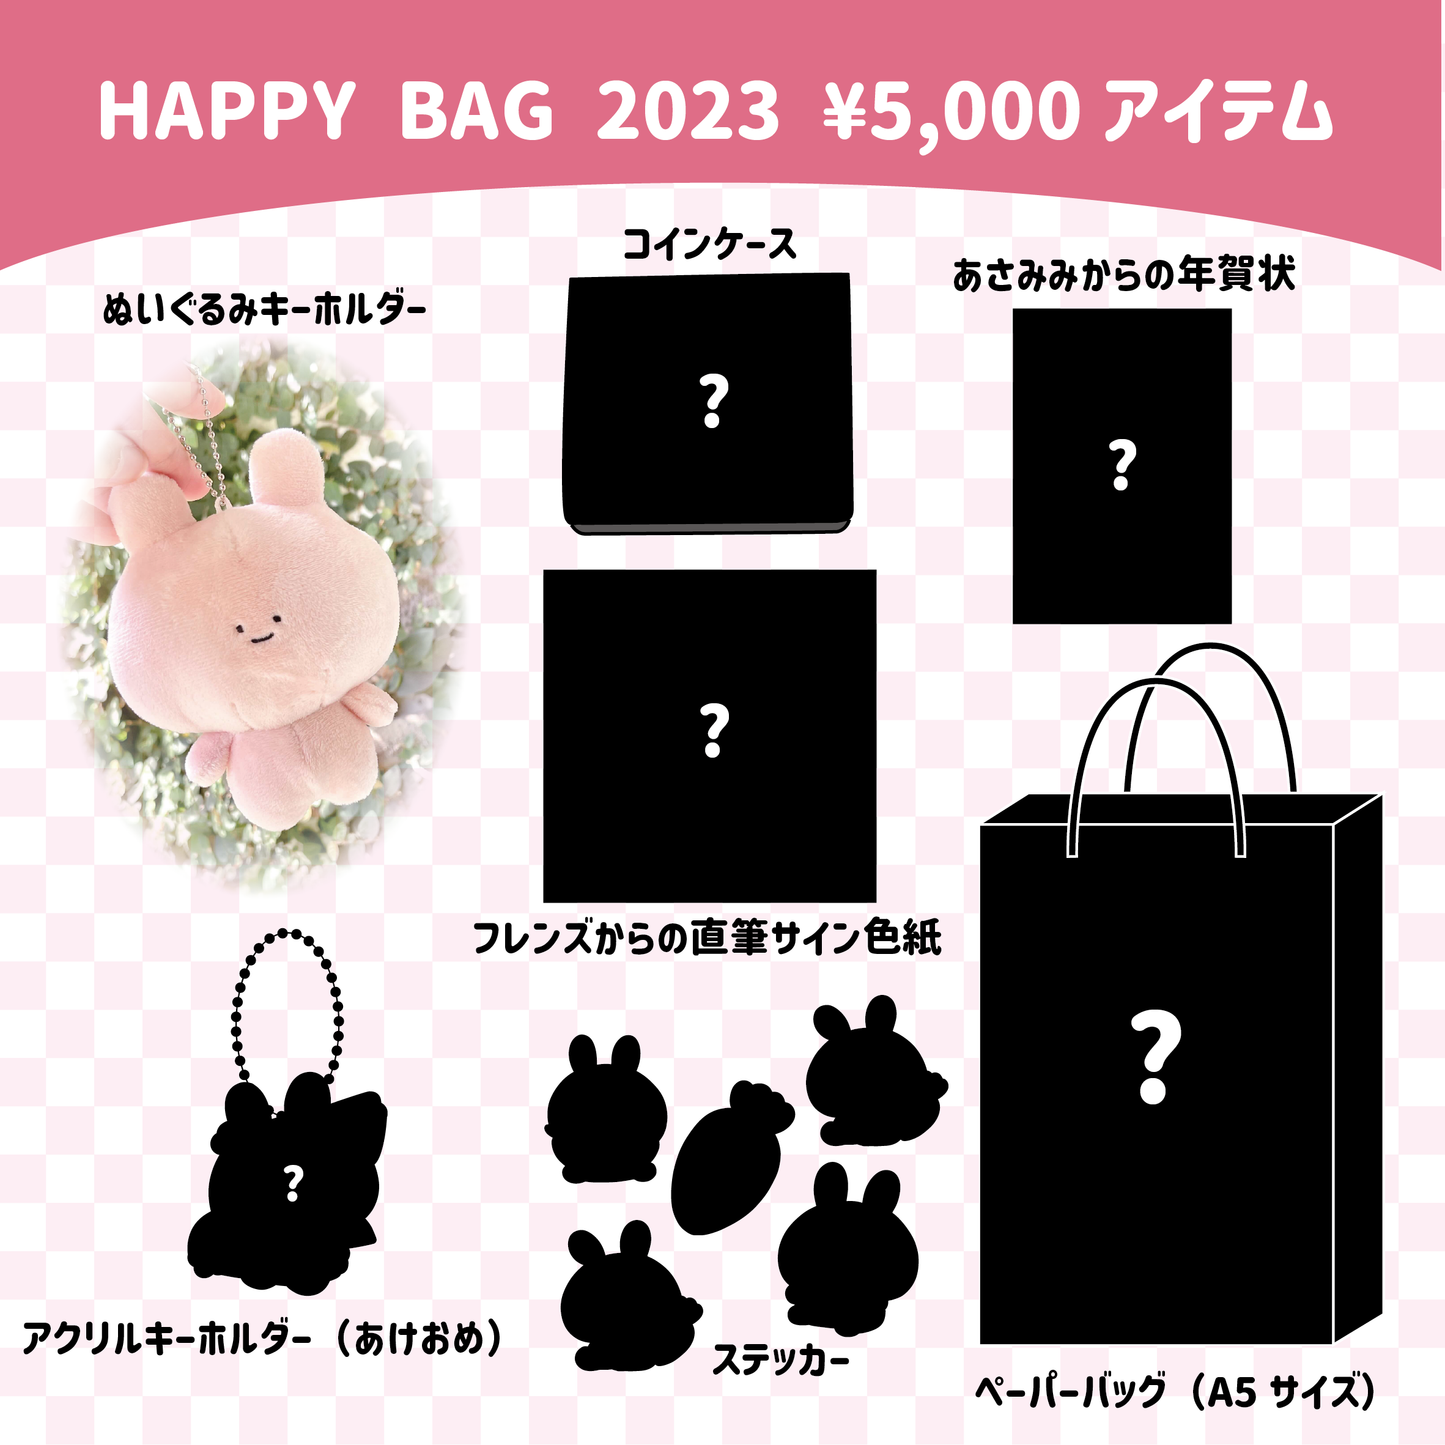 [Asamimi-chan] ASAMIMI HAPPY BAG (¥5.000) [Begrenzte Menge vorbestellen]